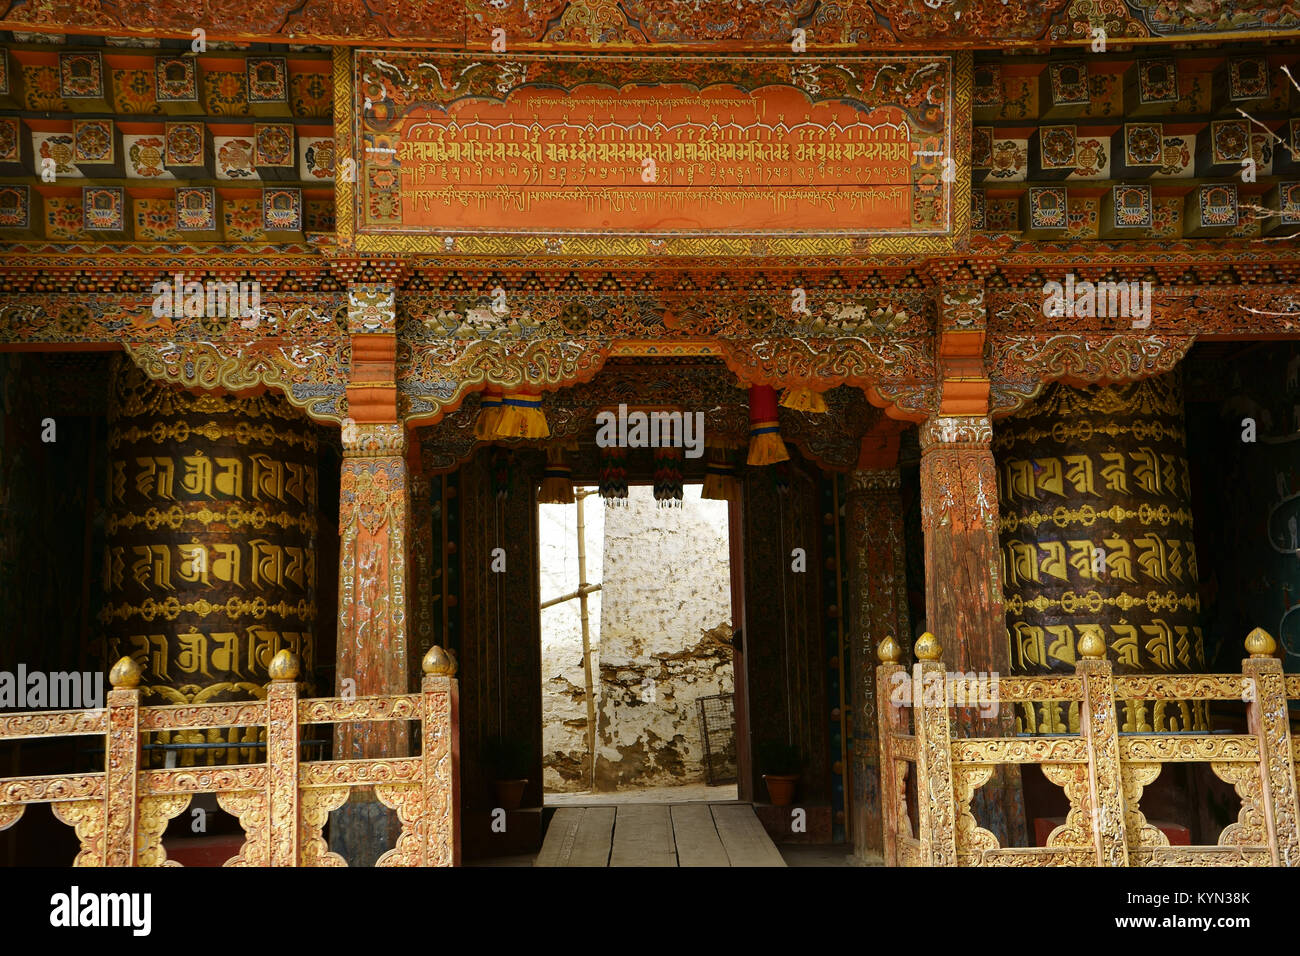 Tango Buddhist monastery and university, entrance with prayer wheels, Bhutan Stock Photo